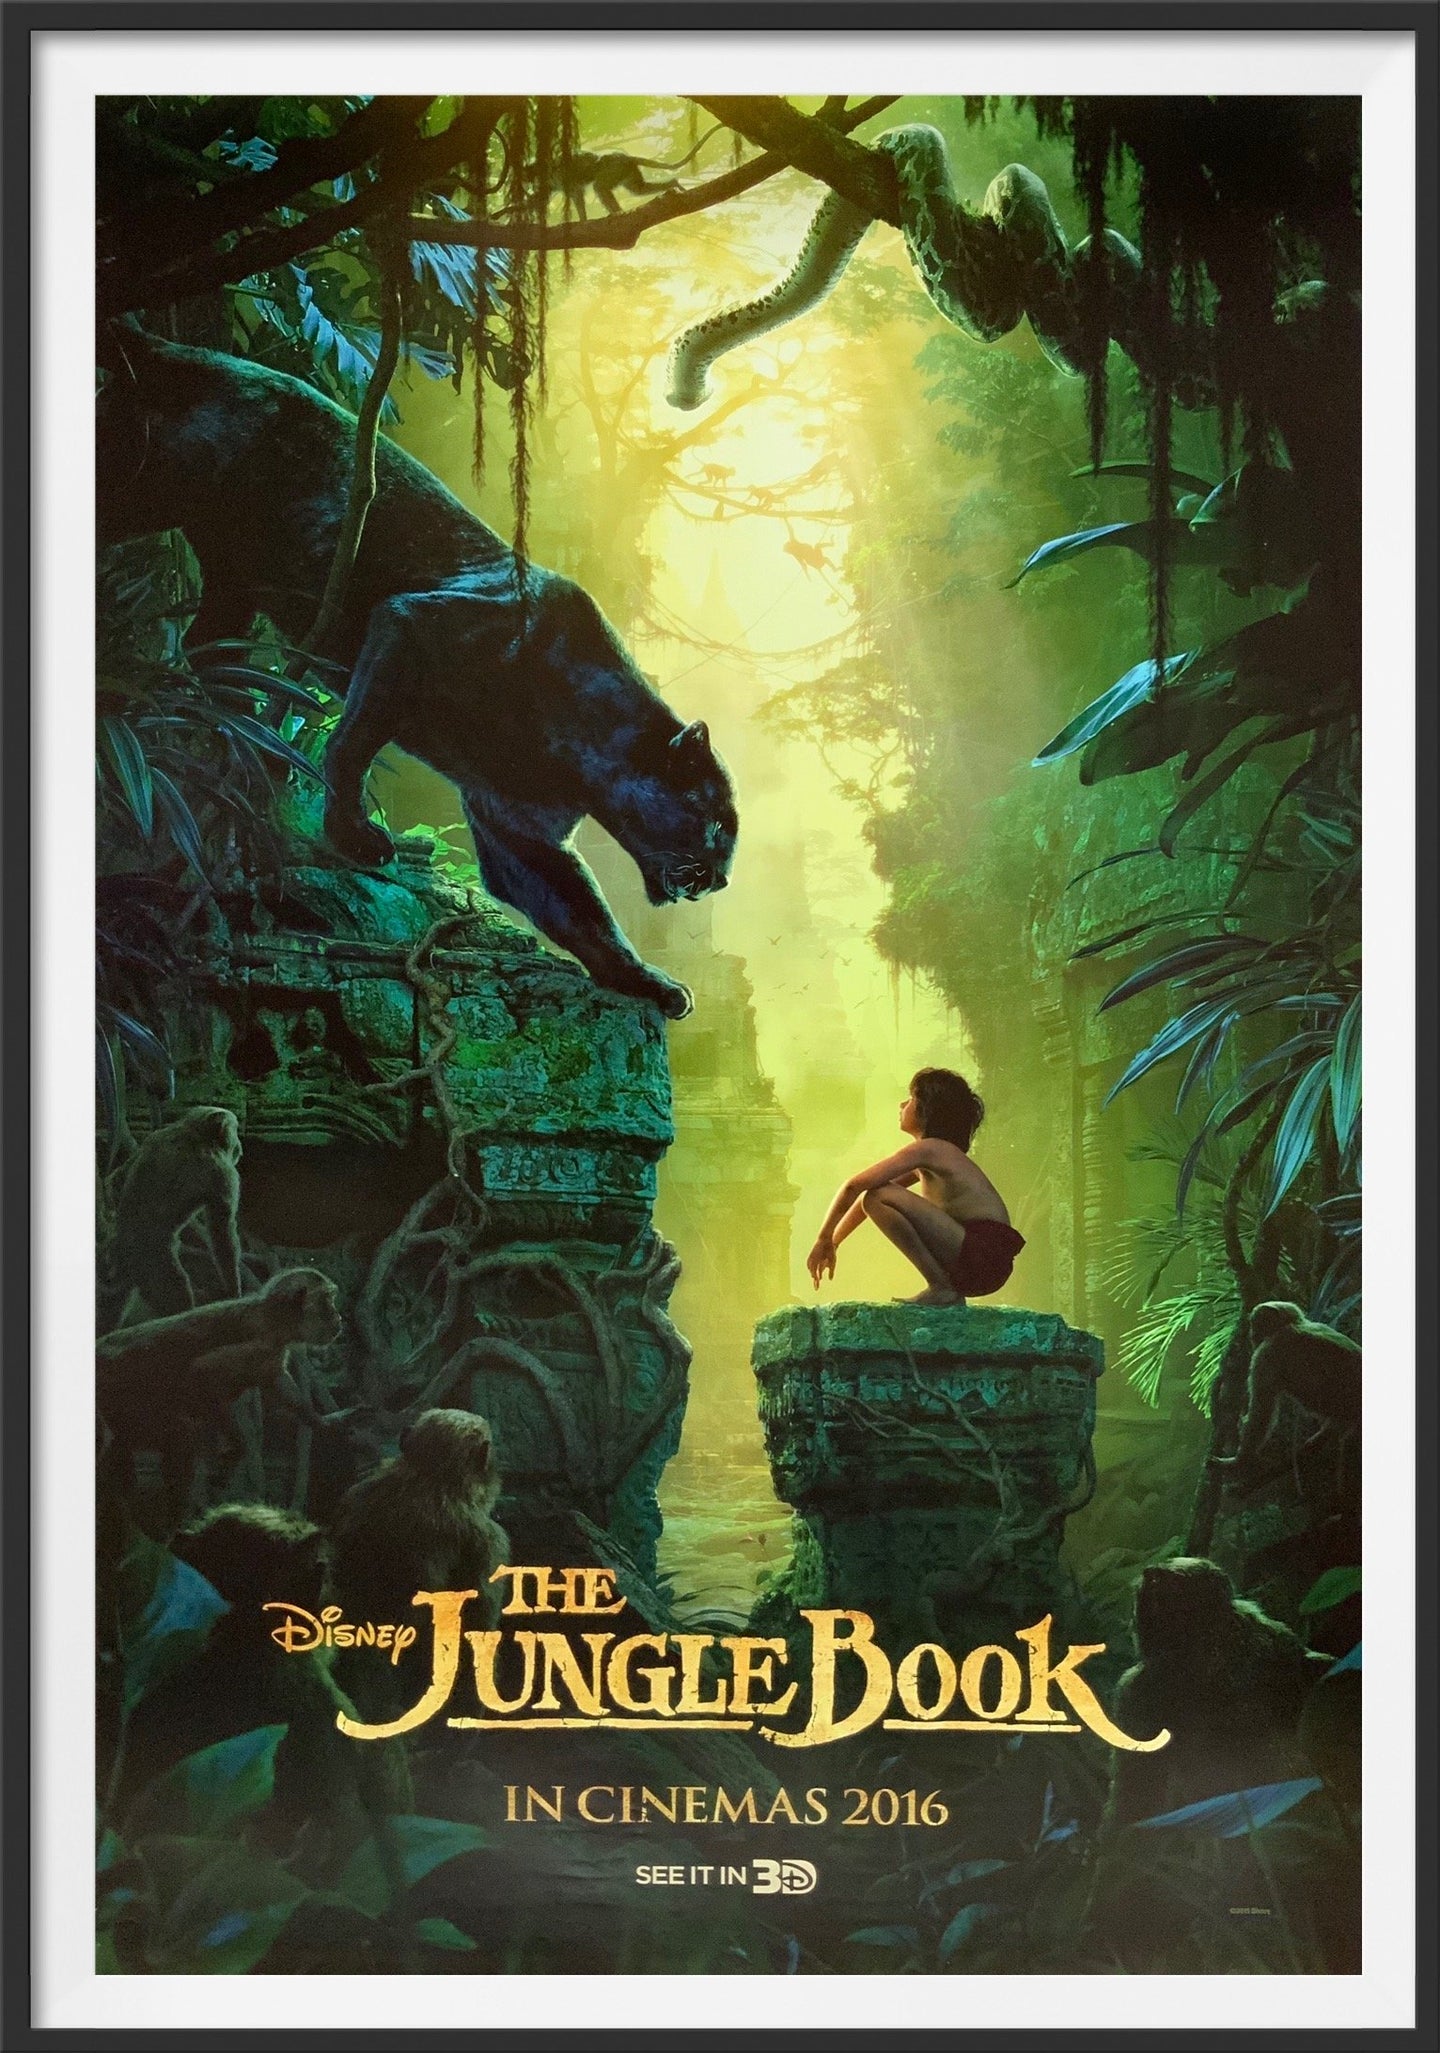 An original movie poster for the Disney film The Jungle Book